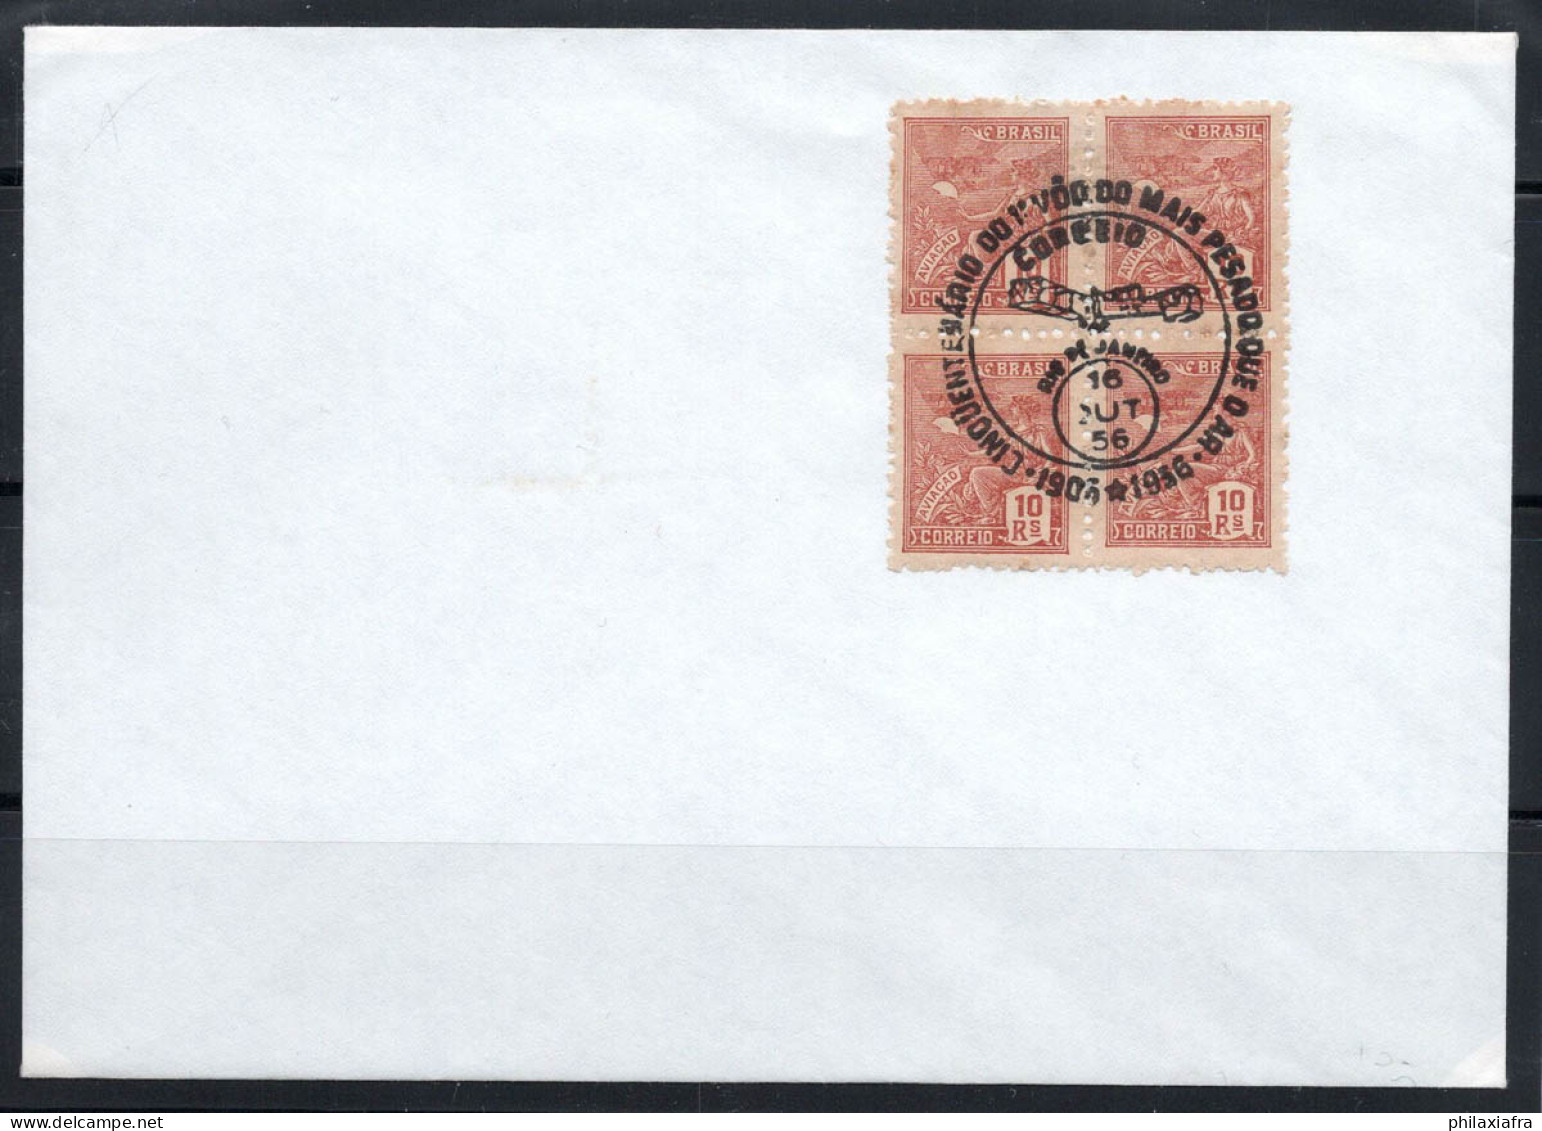 Brésil 1956 Enveloppe 100% Poste Aérienne Rio De Janiero - Briefe U. Dokumente